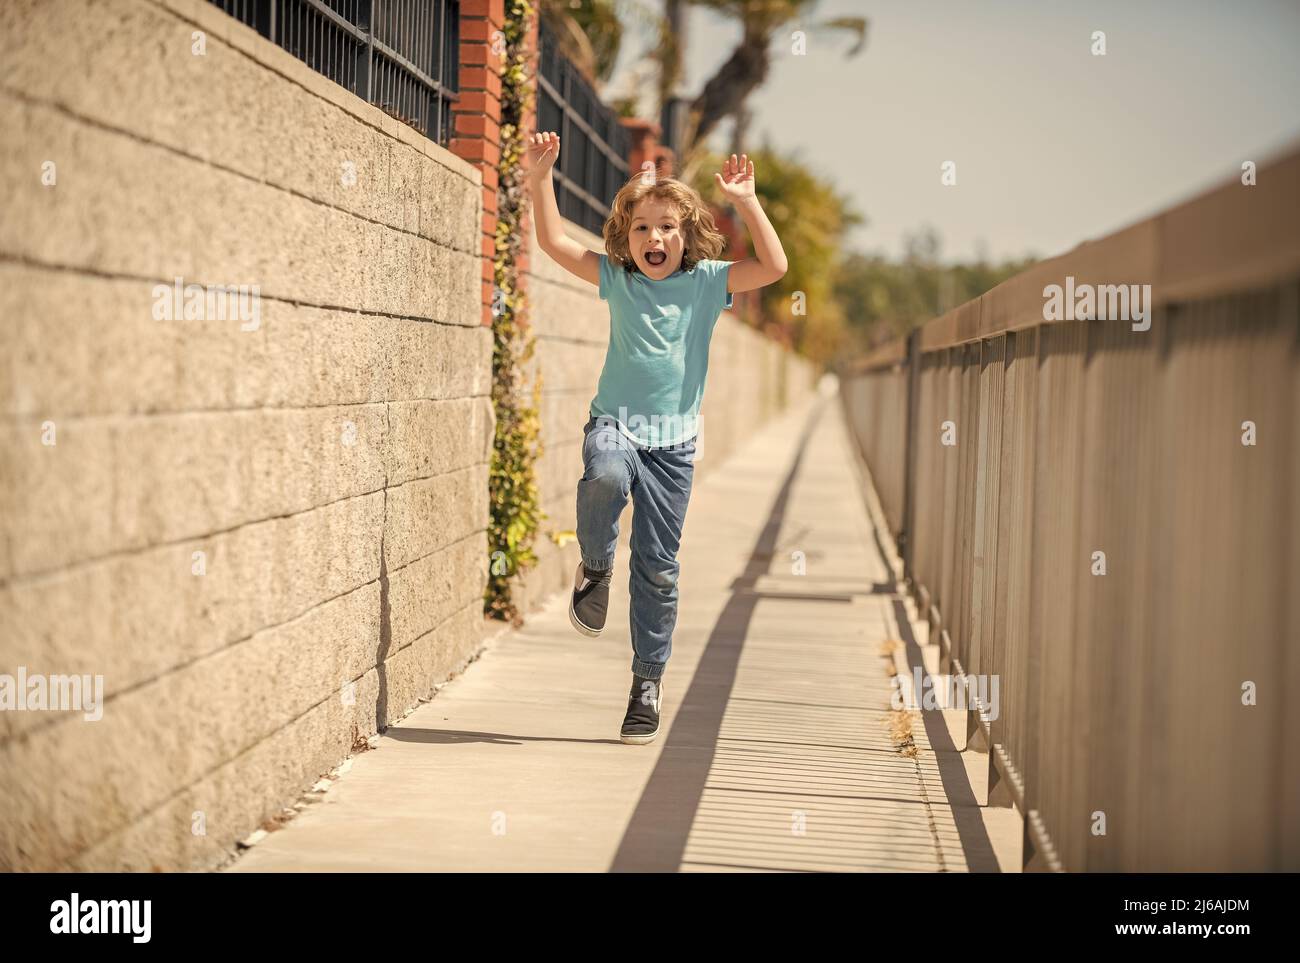 Excited energetic boy child scream running on summer promenade, excitement Stock Photo